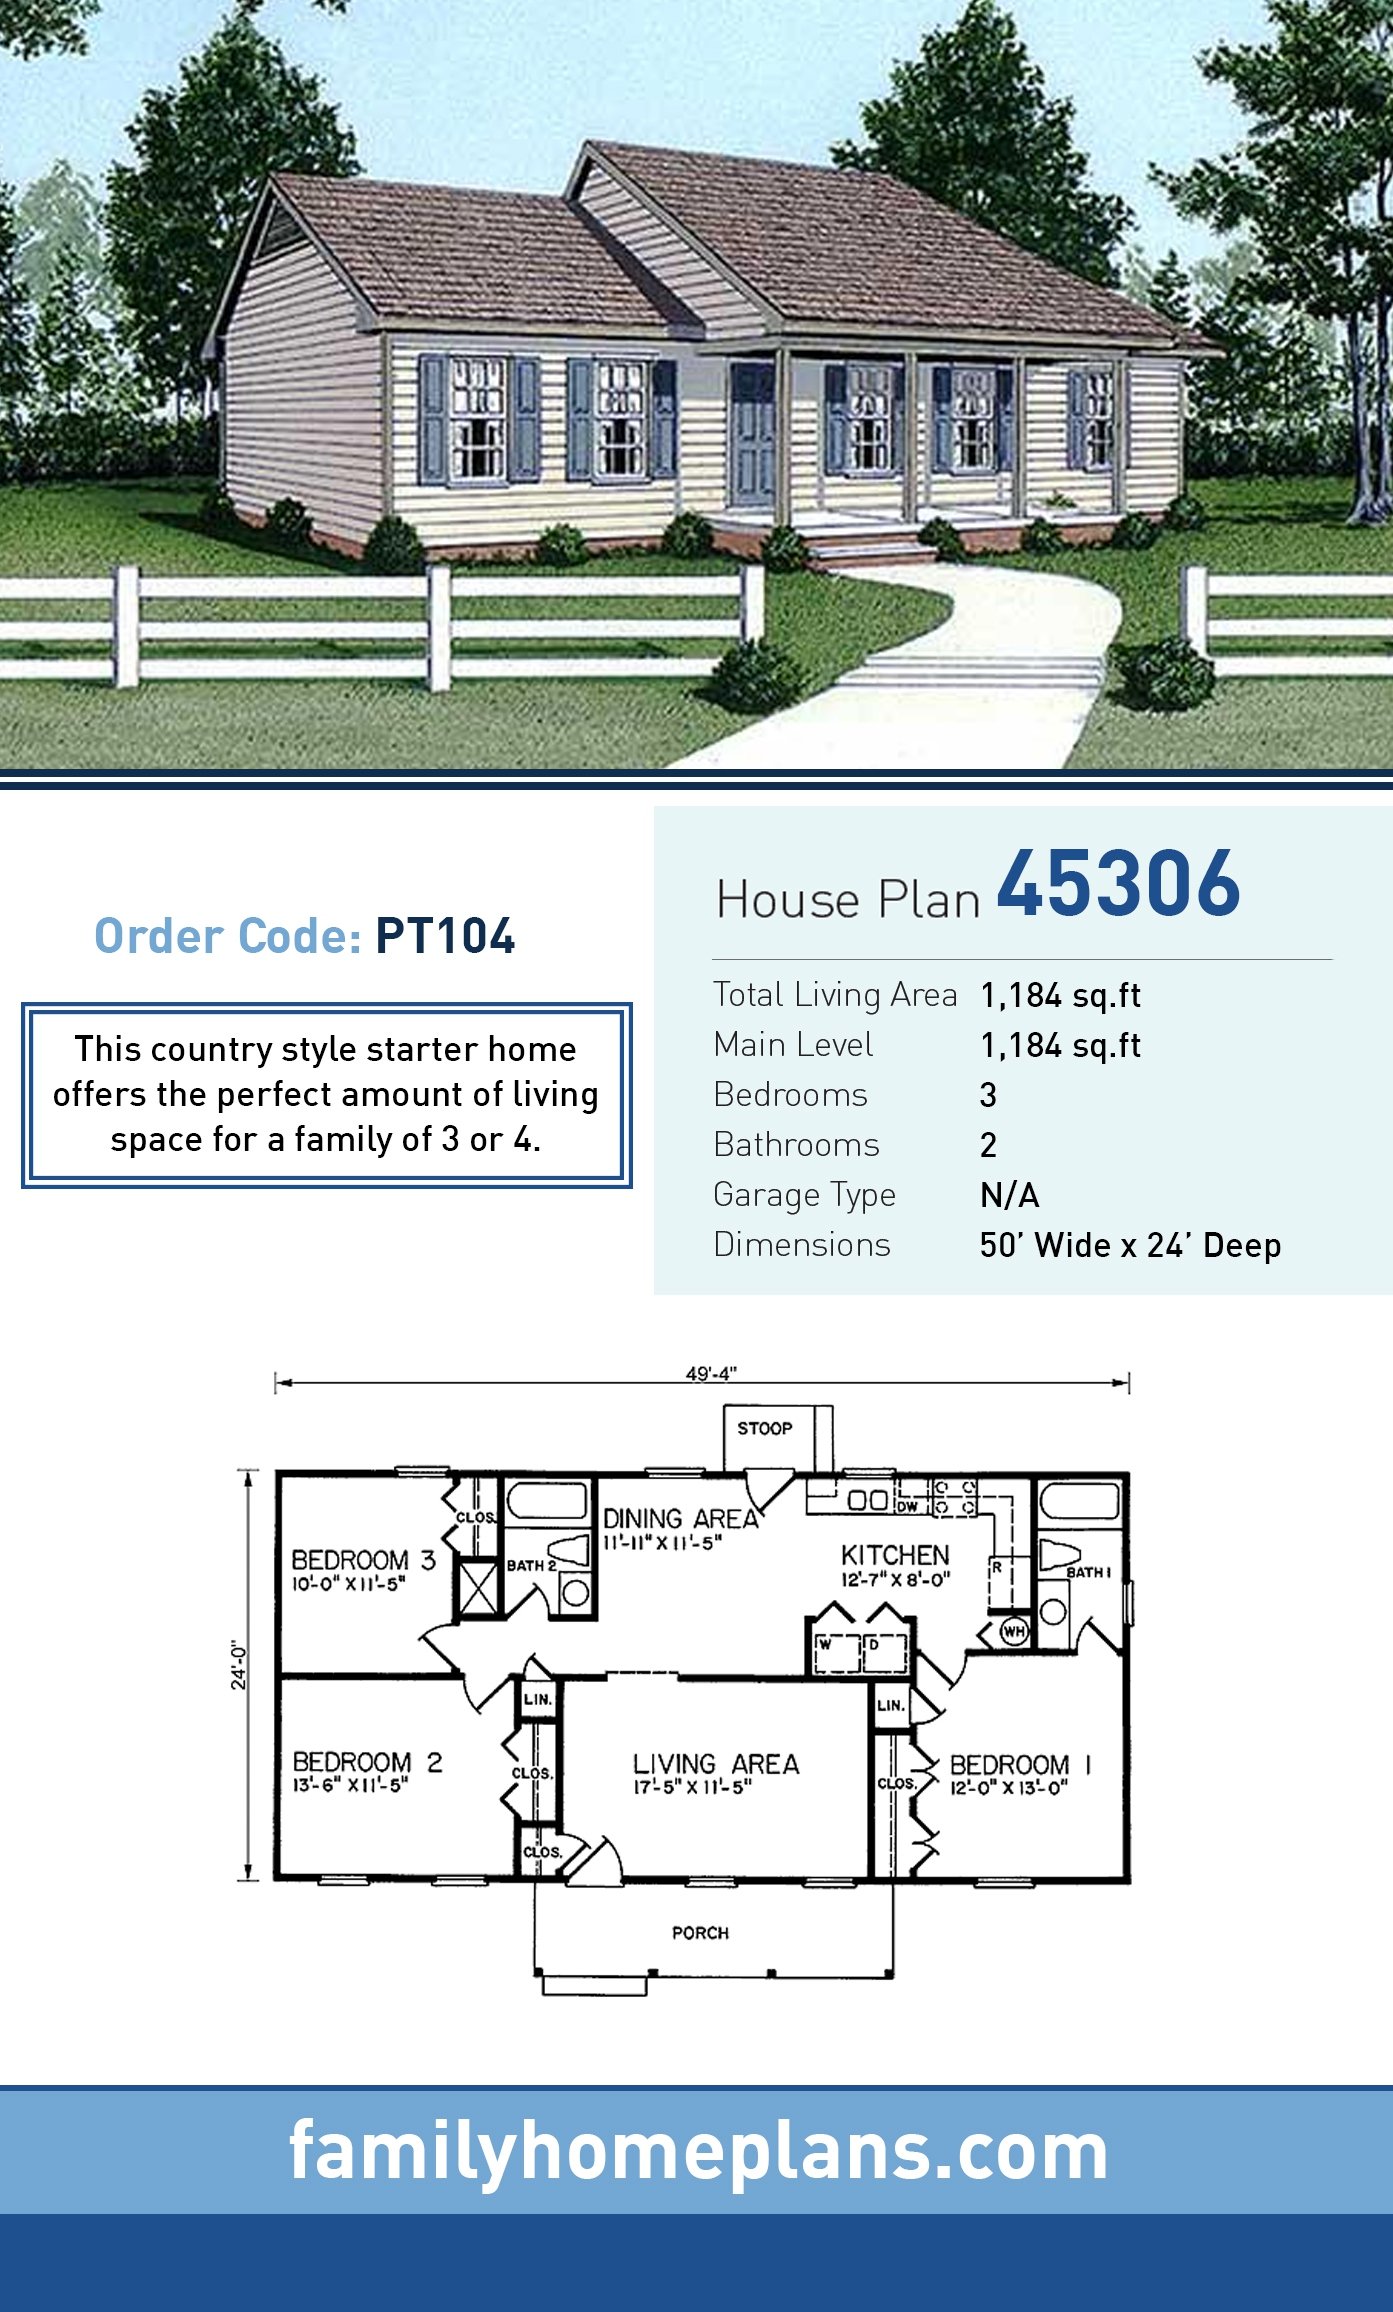 House Plan 45306